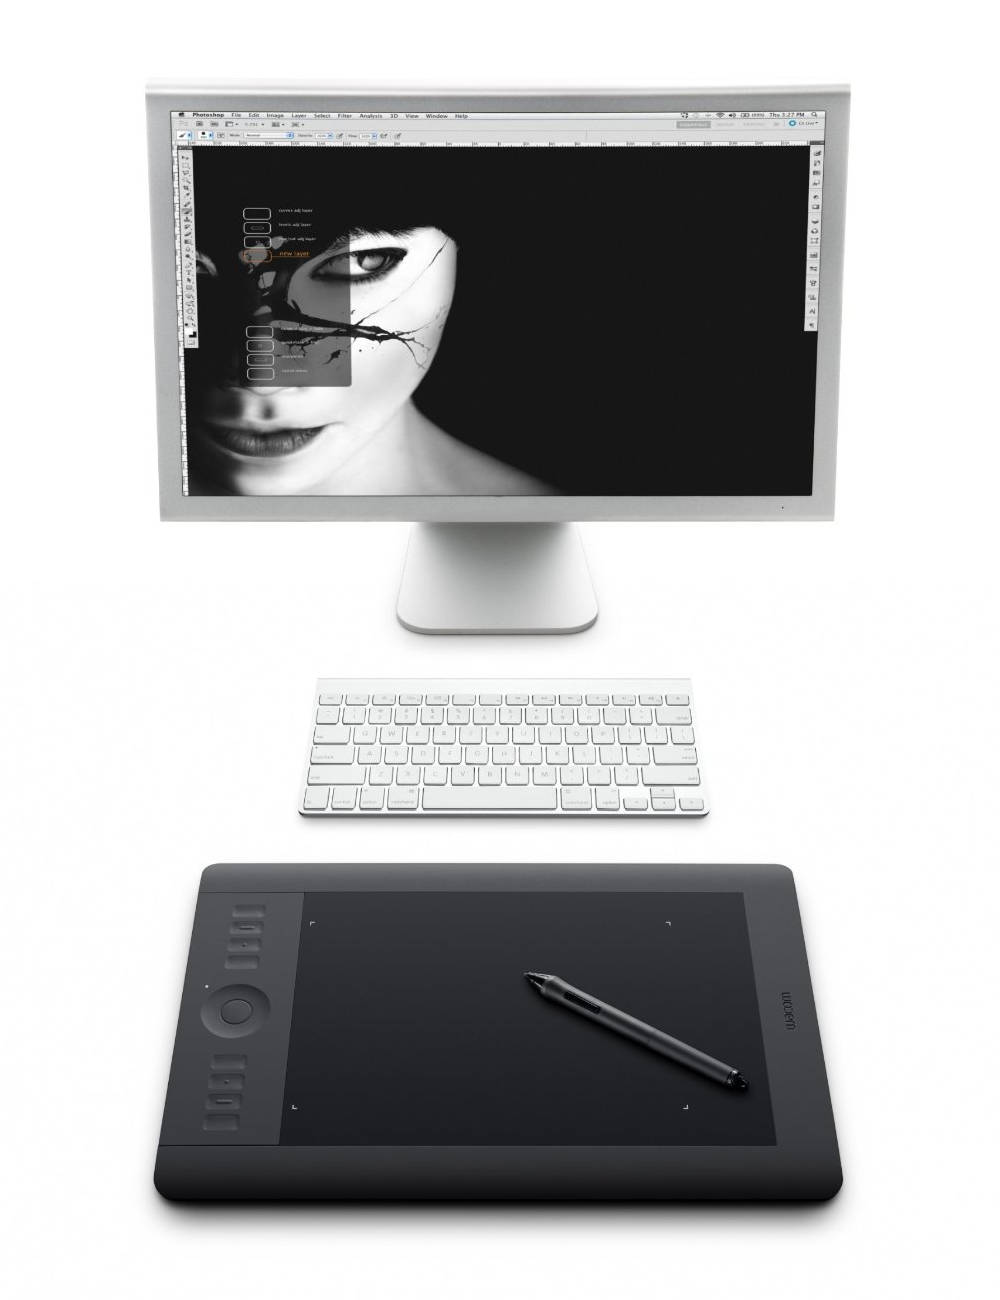 Cool Stuff: Wacom Intuos5 Touch Medium Pen Tablet | TNG (Times New Geek)